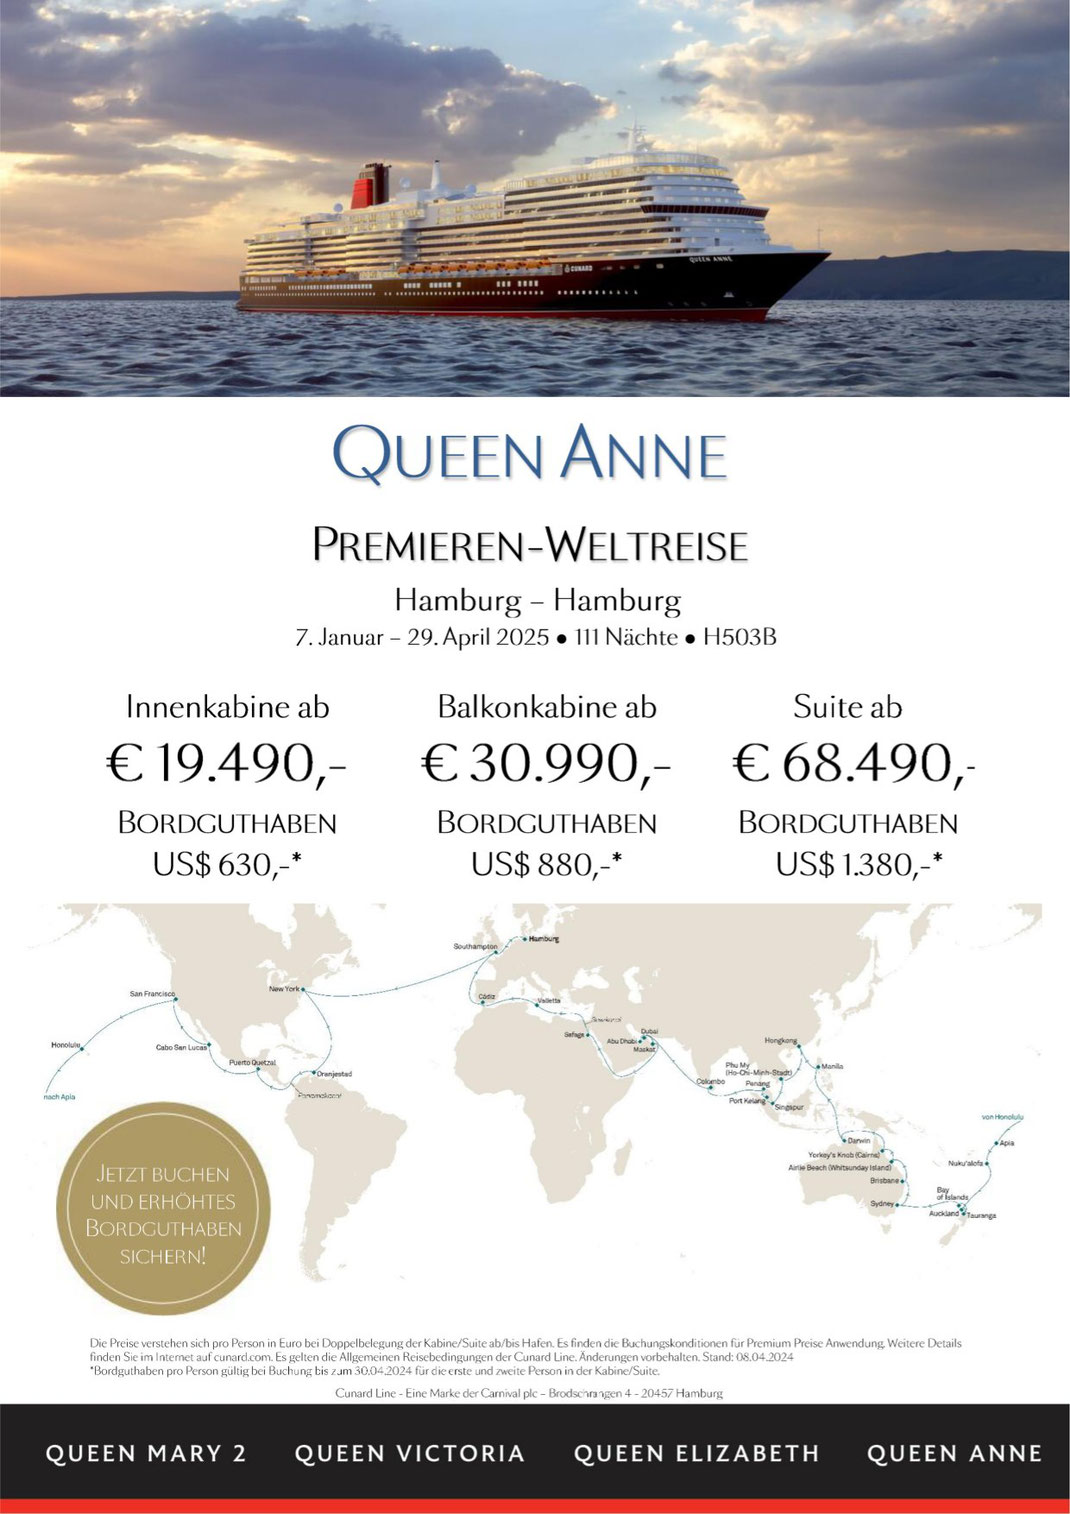 Queen Anne Weltreise 2025 ab Hamburg mit New York, Panamakanal, San Francisco, Hawaii, Südsee, Australien, Hongkong, Saigon, Malaysia, Dubai, Suezkanal und Mittelmeer 2025